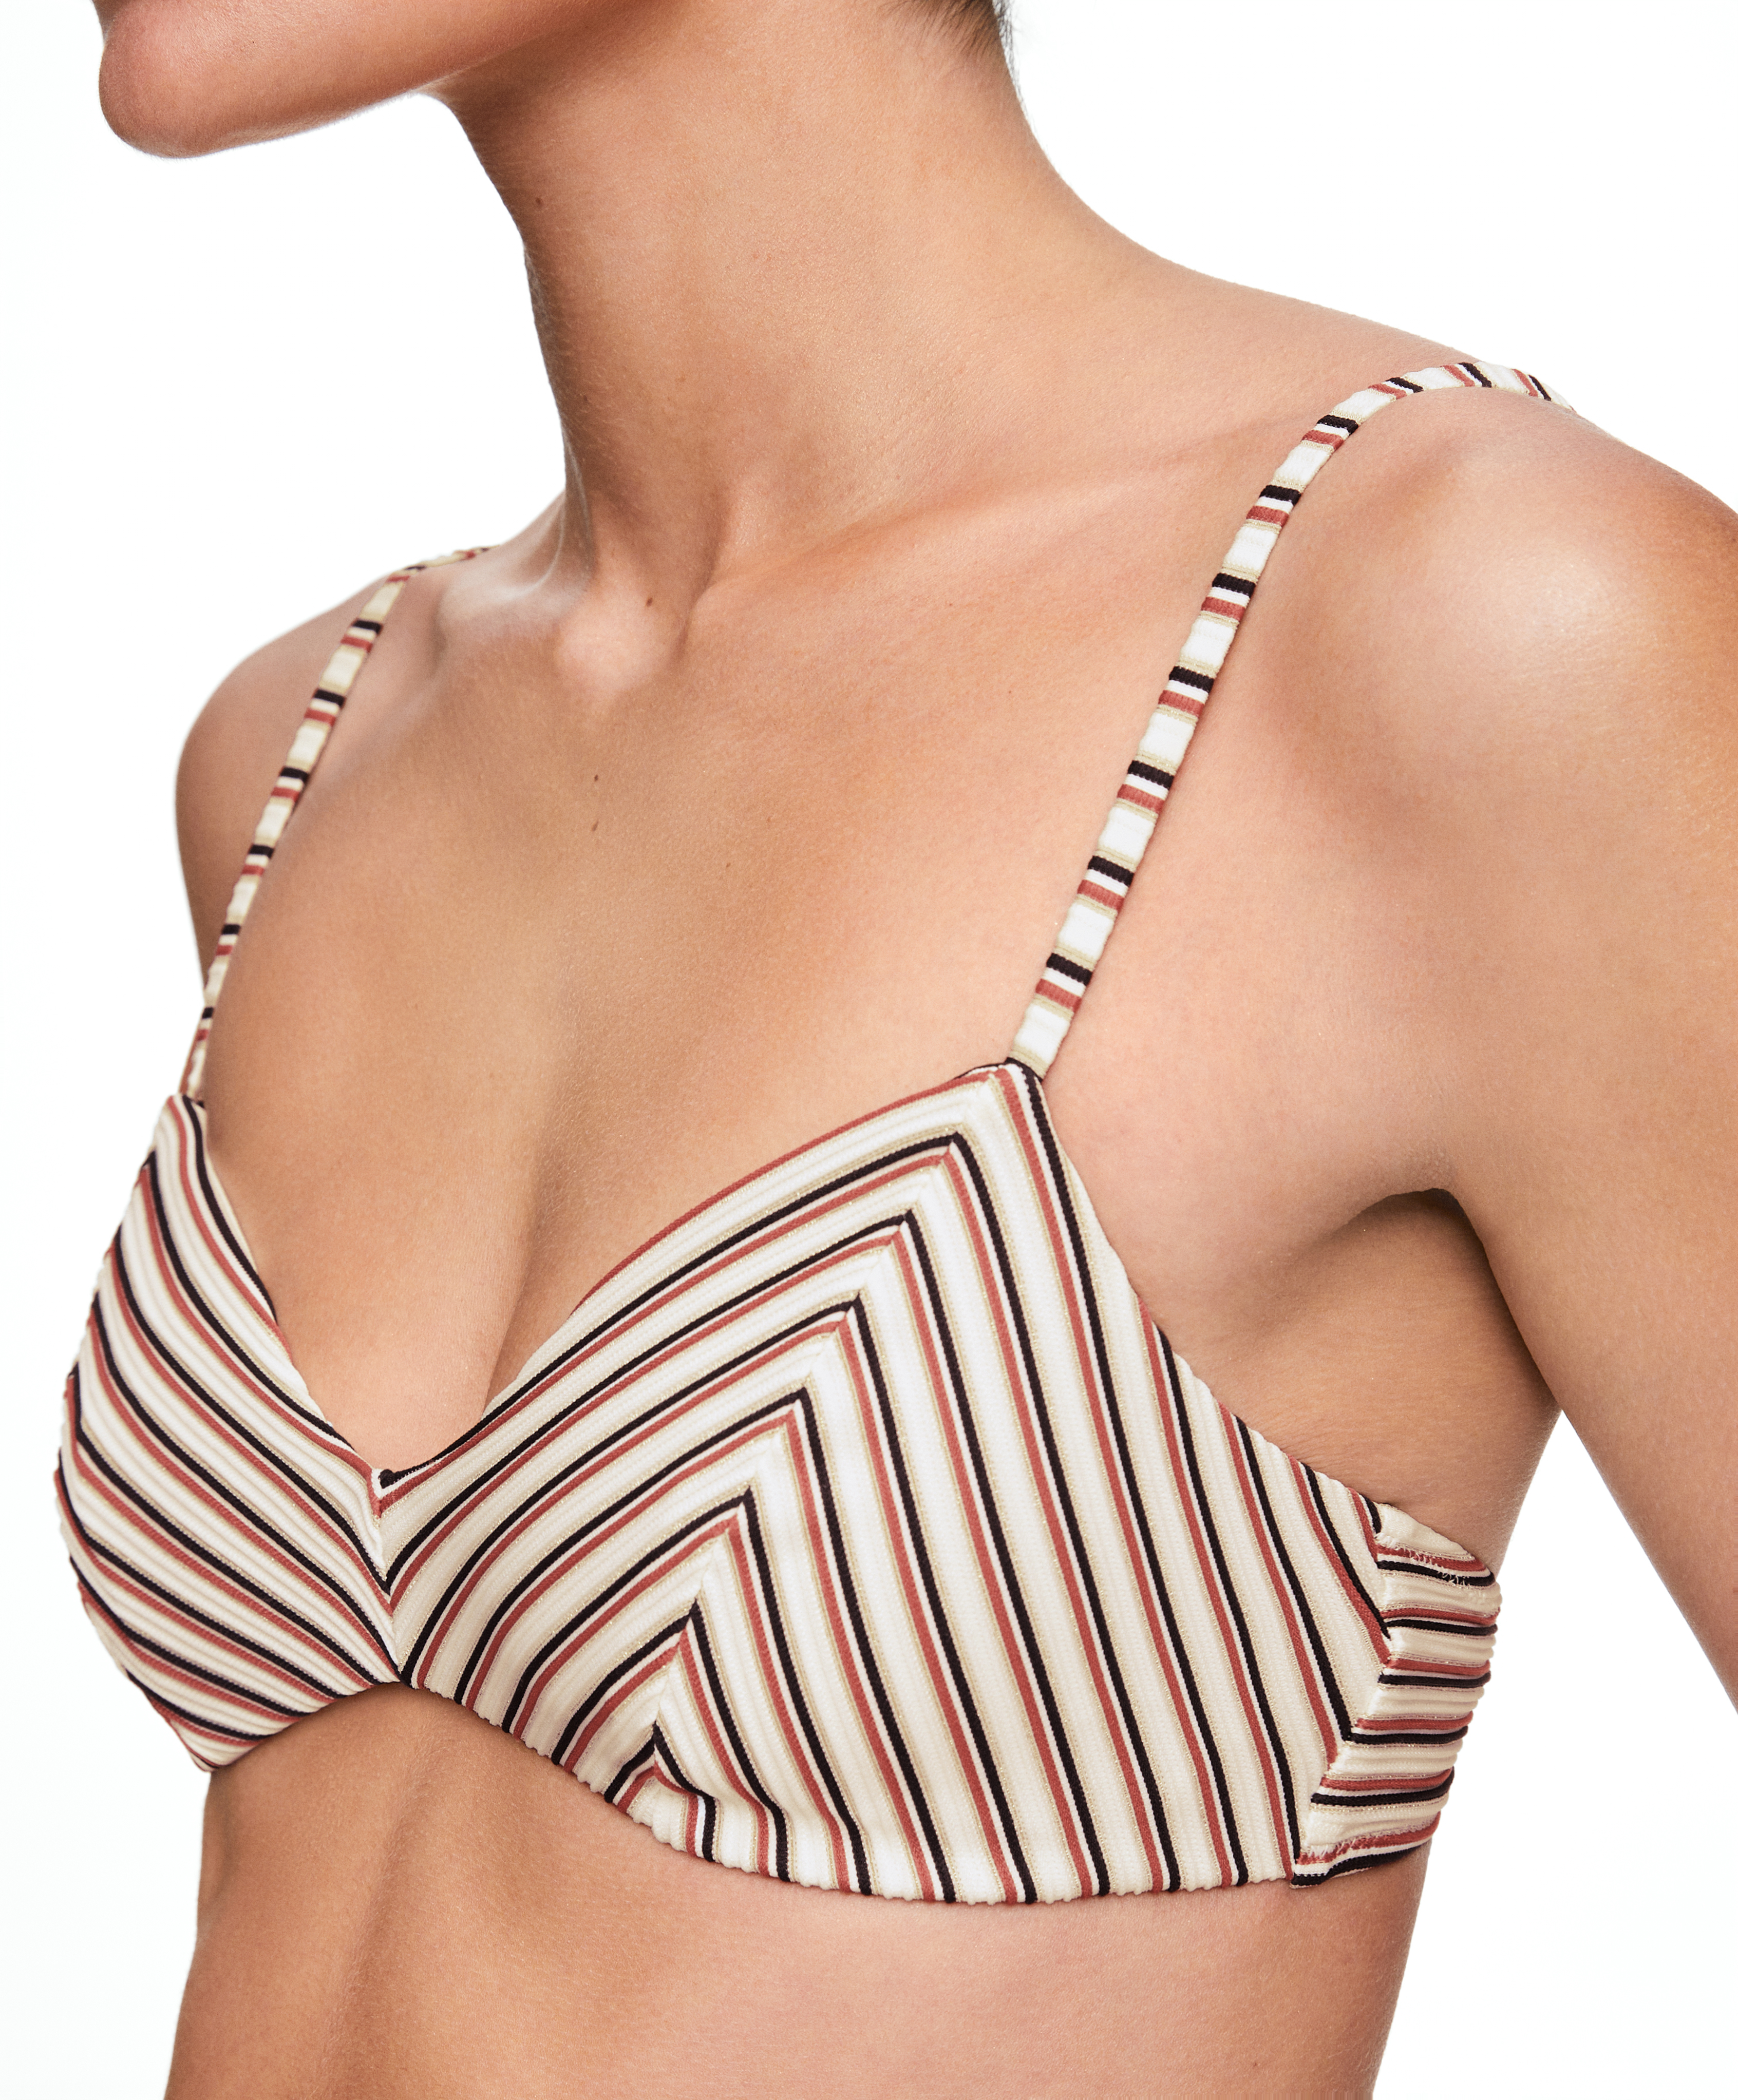 Lunch Vertolking Illusie Textured stripe triangle bikini top | OYSHO United States